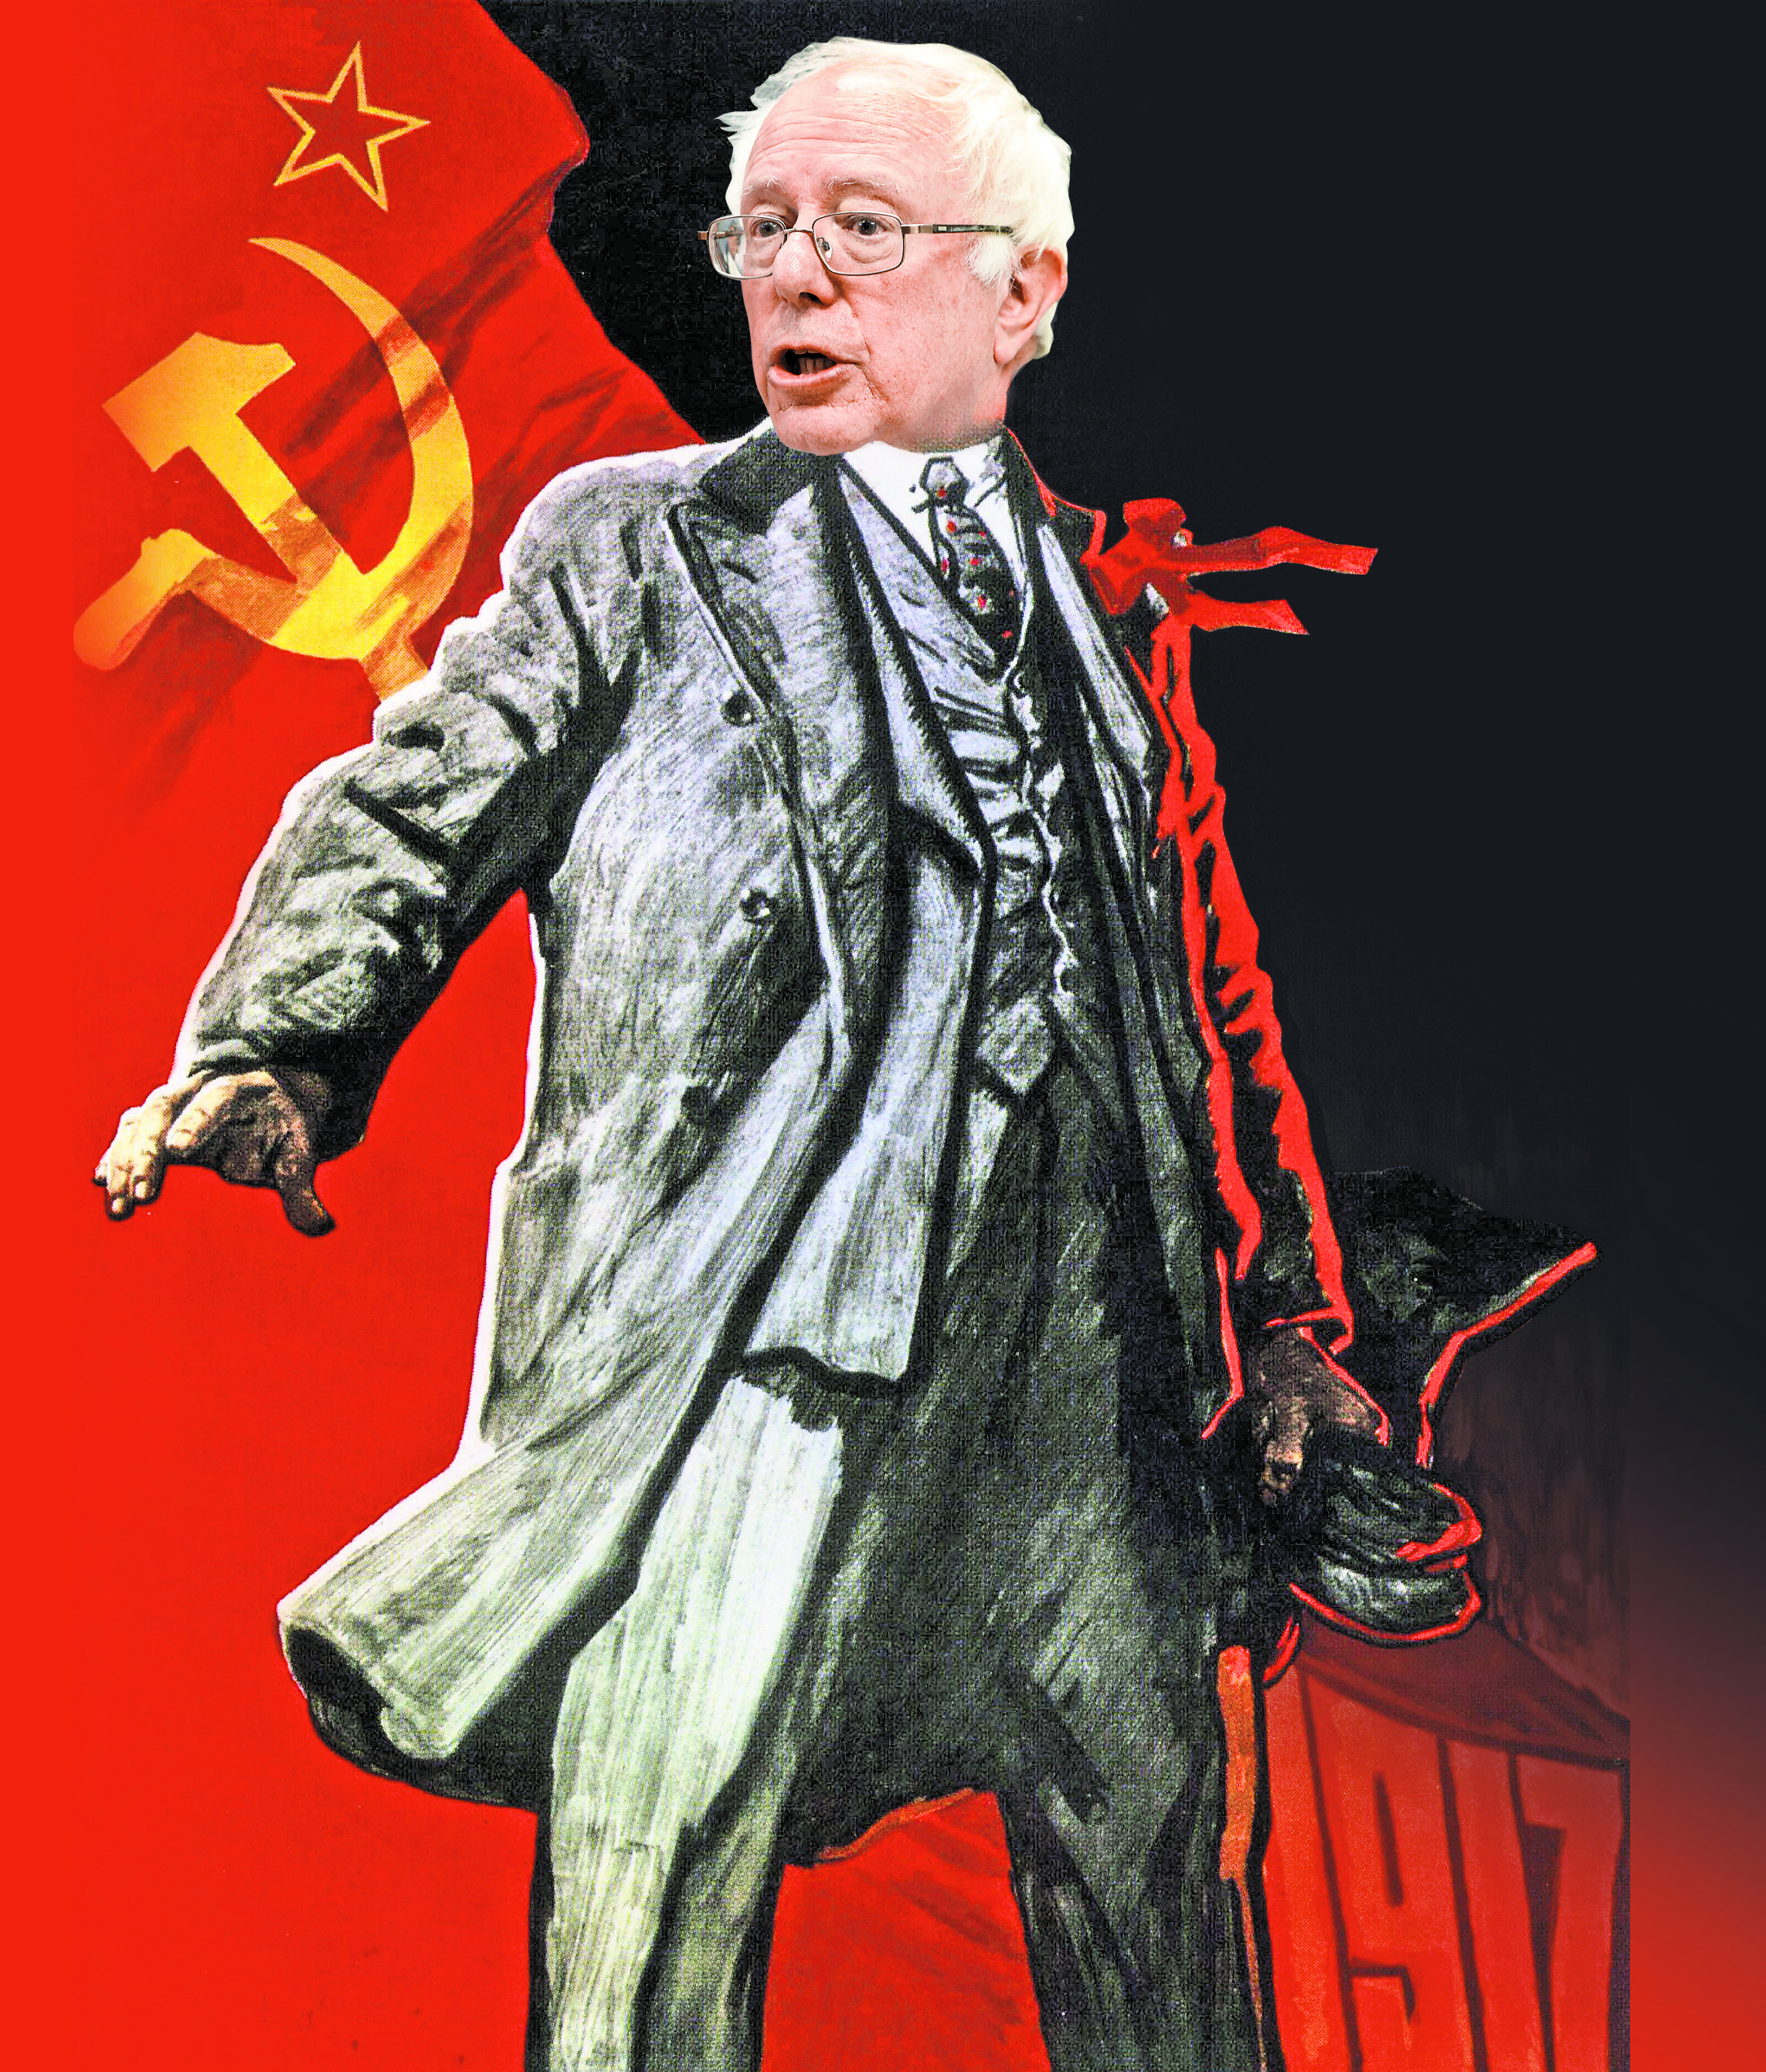 Wall Street and the Bolshevik Bernie Revolution